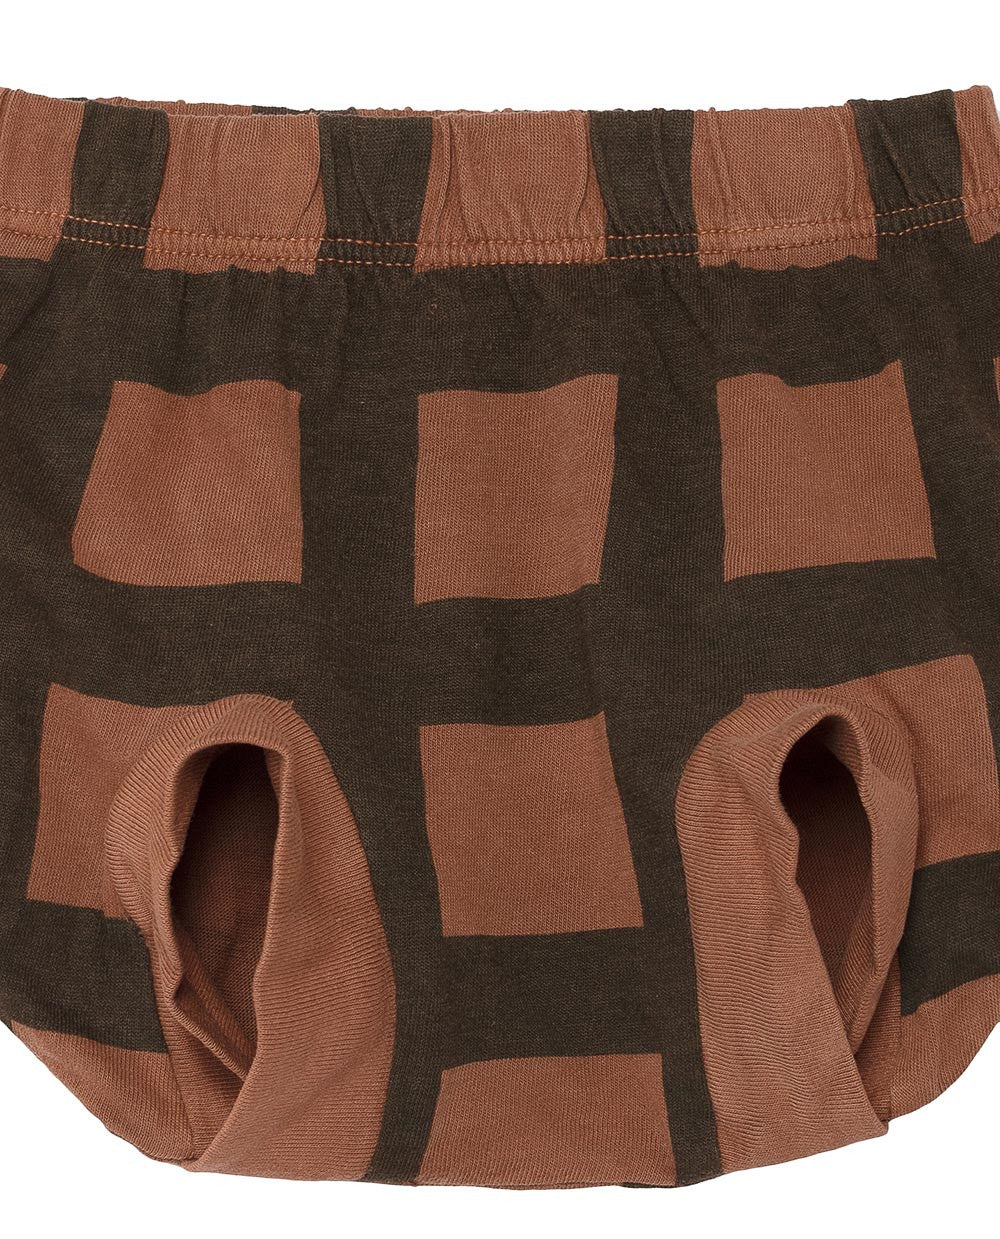 Baby Brown Cotton Shortie - CÉMAROSE | Children's Fashion Store - 3